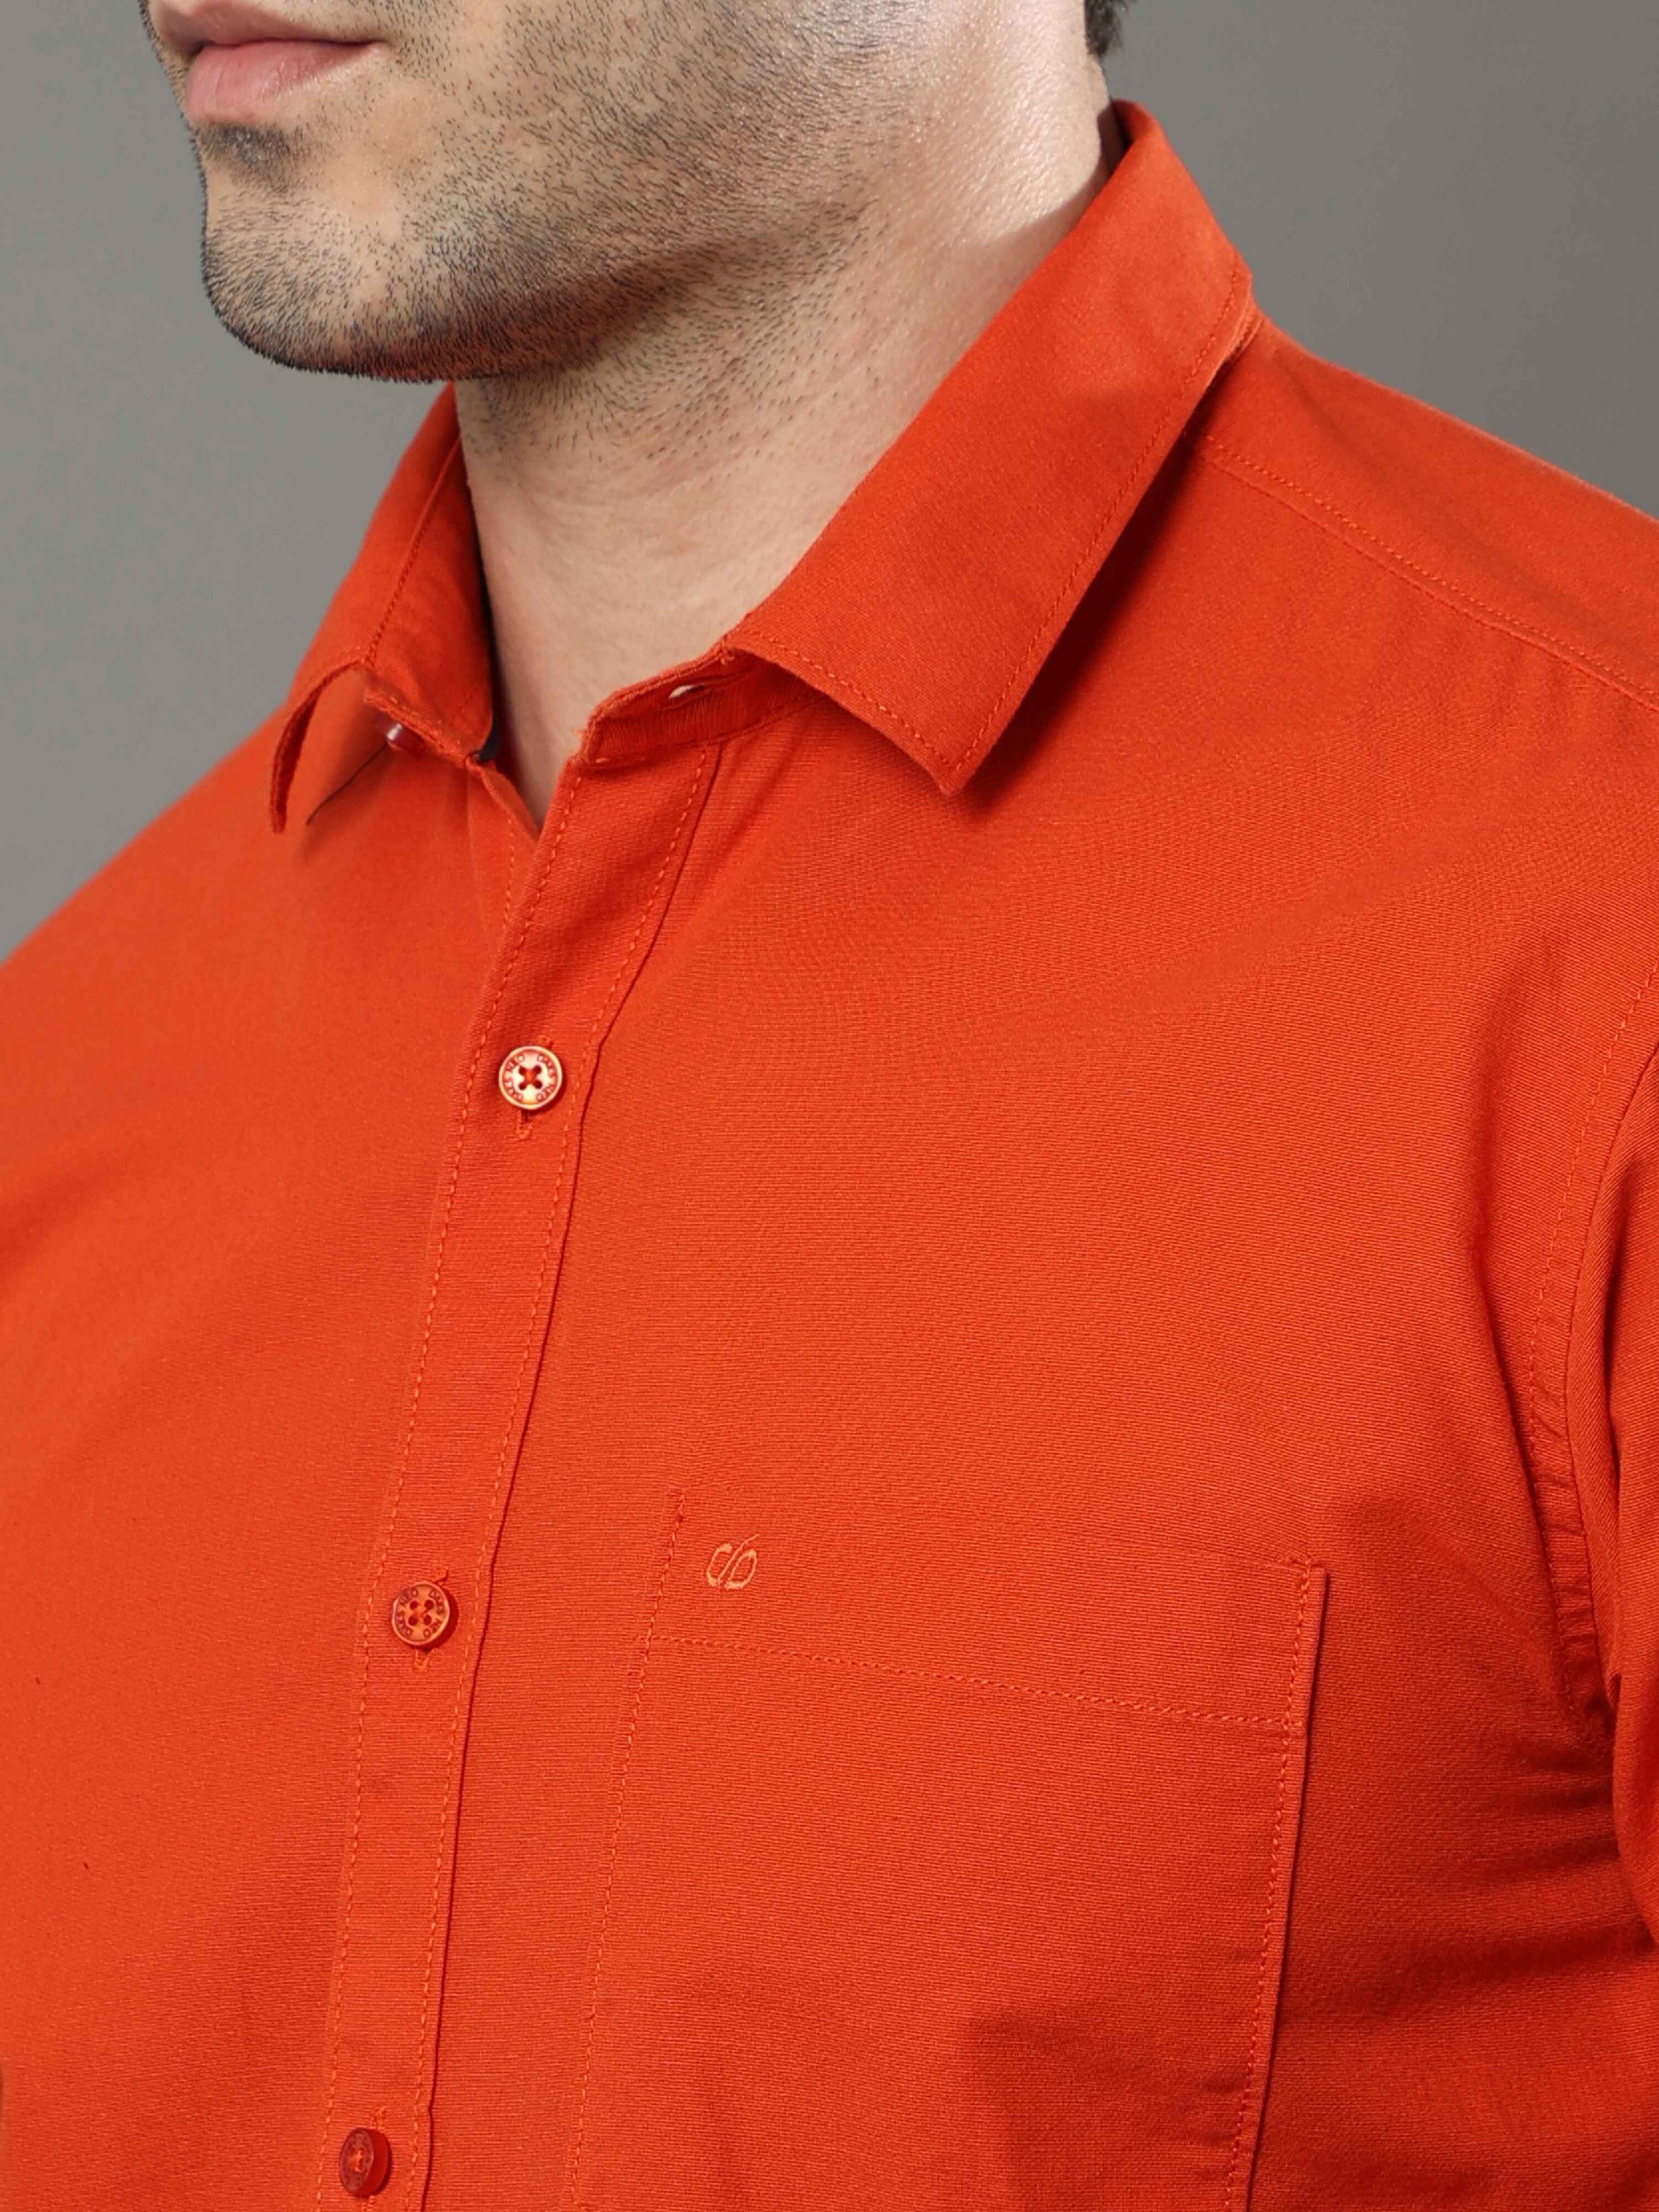 Rusty Red Plain Shirt